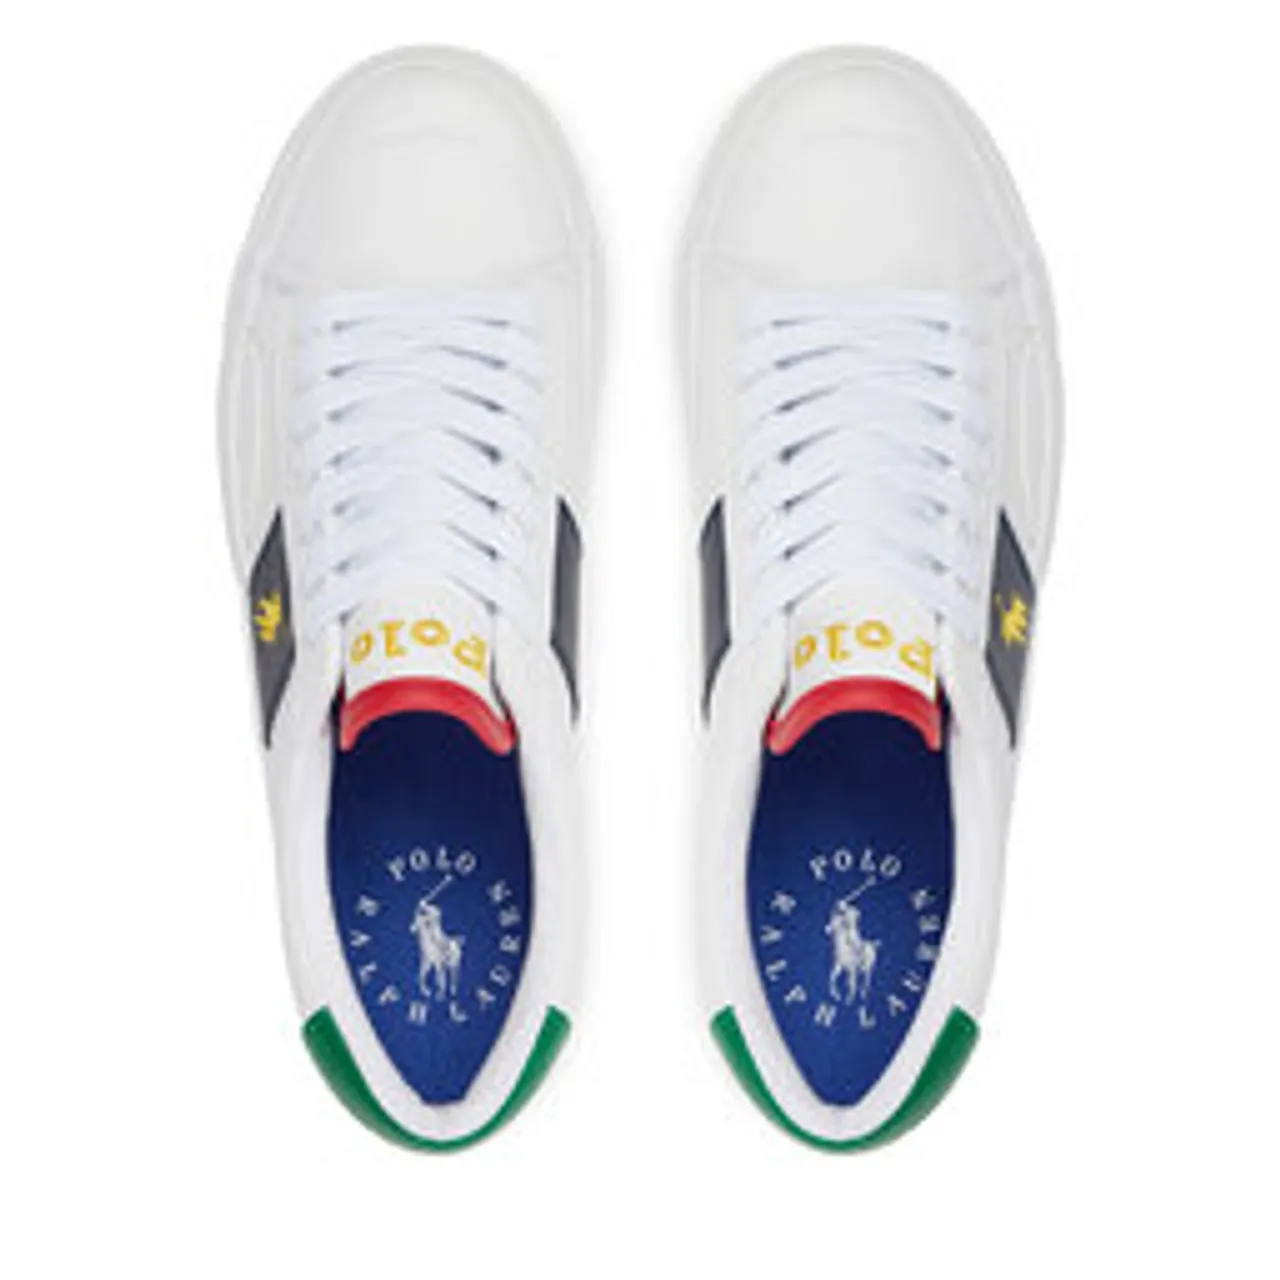 Sneakers Polo Ralph Lauren RL00564110 J White Tumbled/Navy/Green W/ Yellow Pp